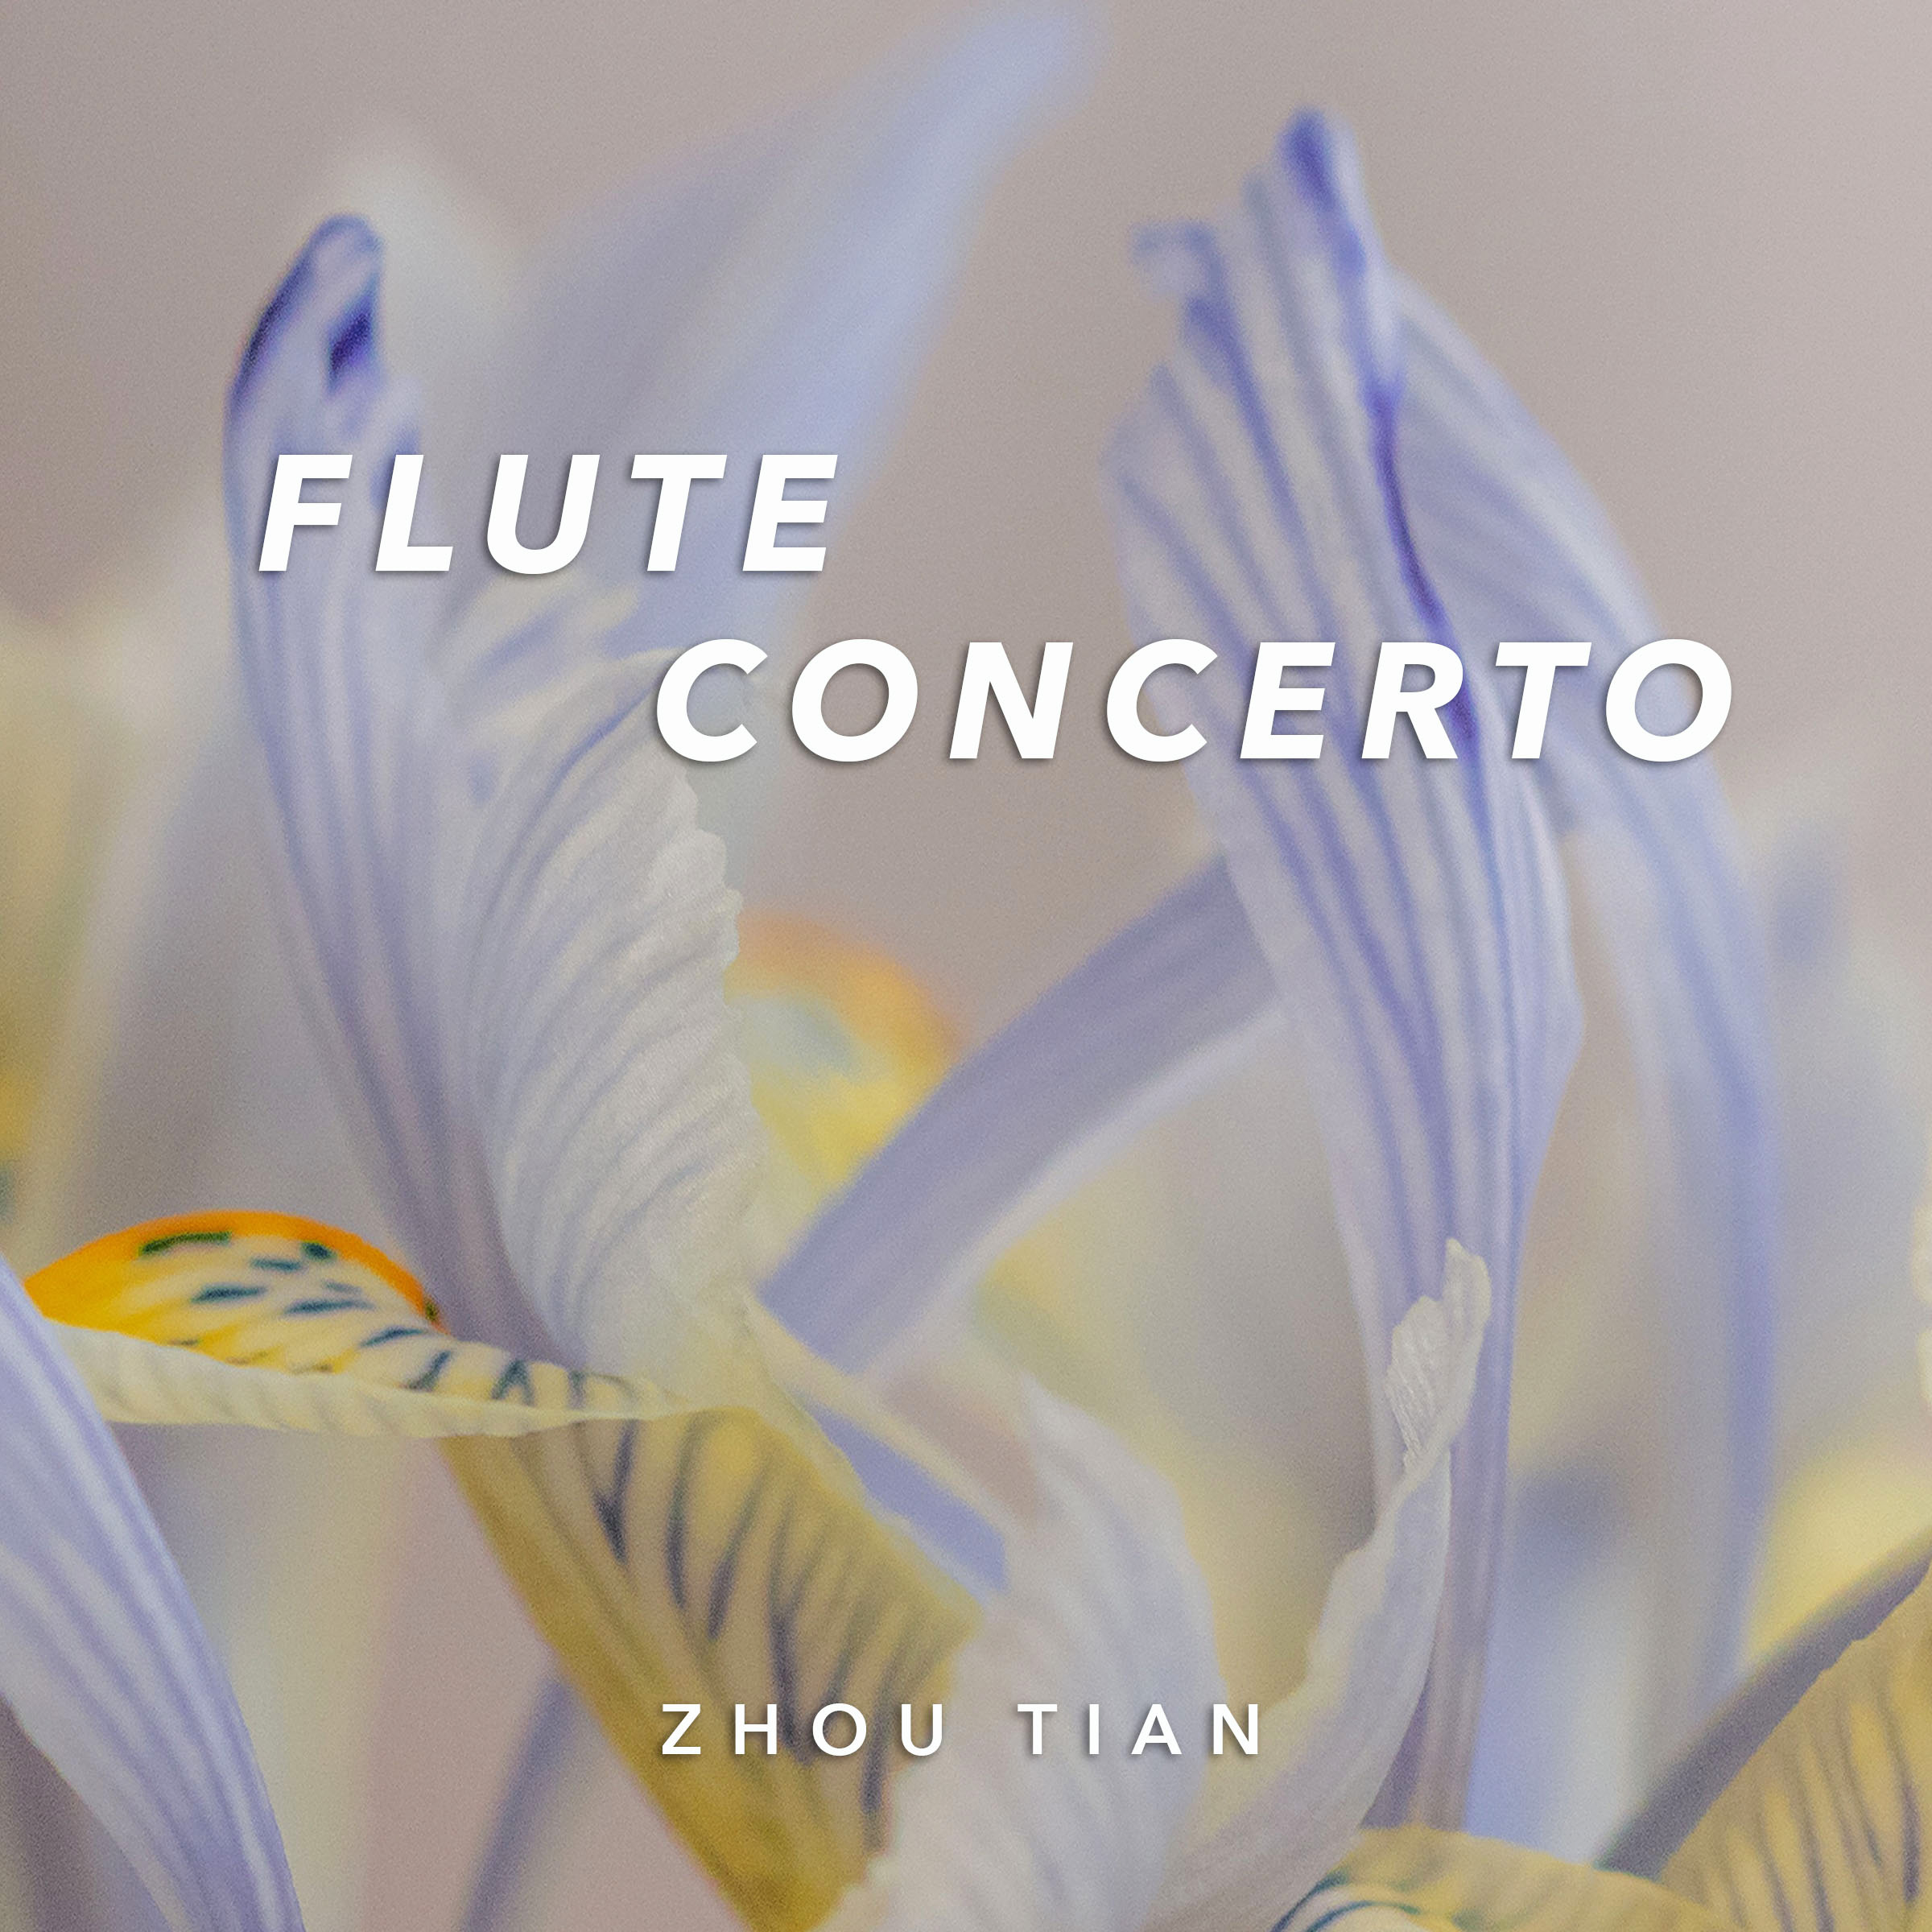 Flute-Concerto-4a-1